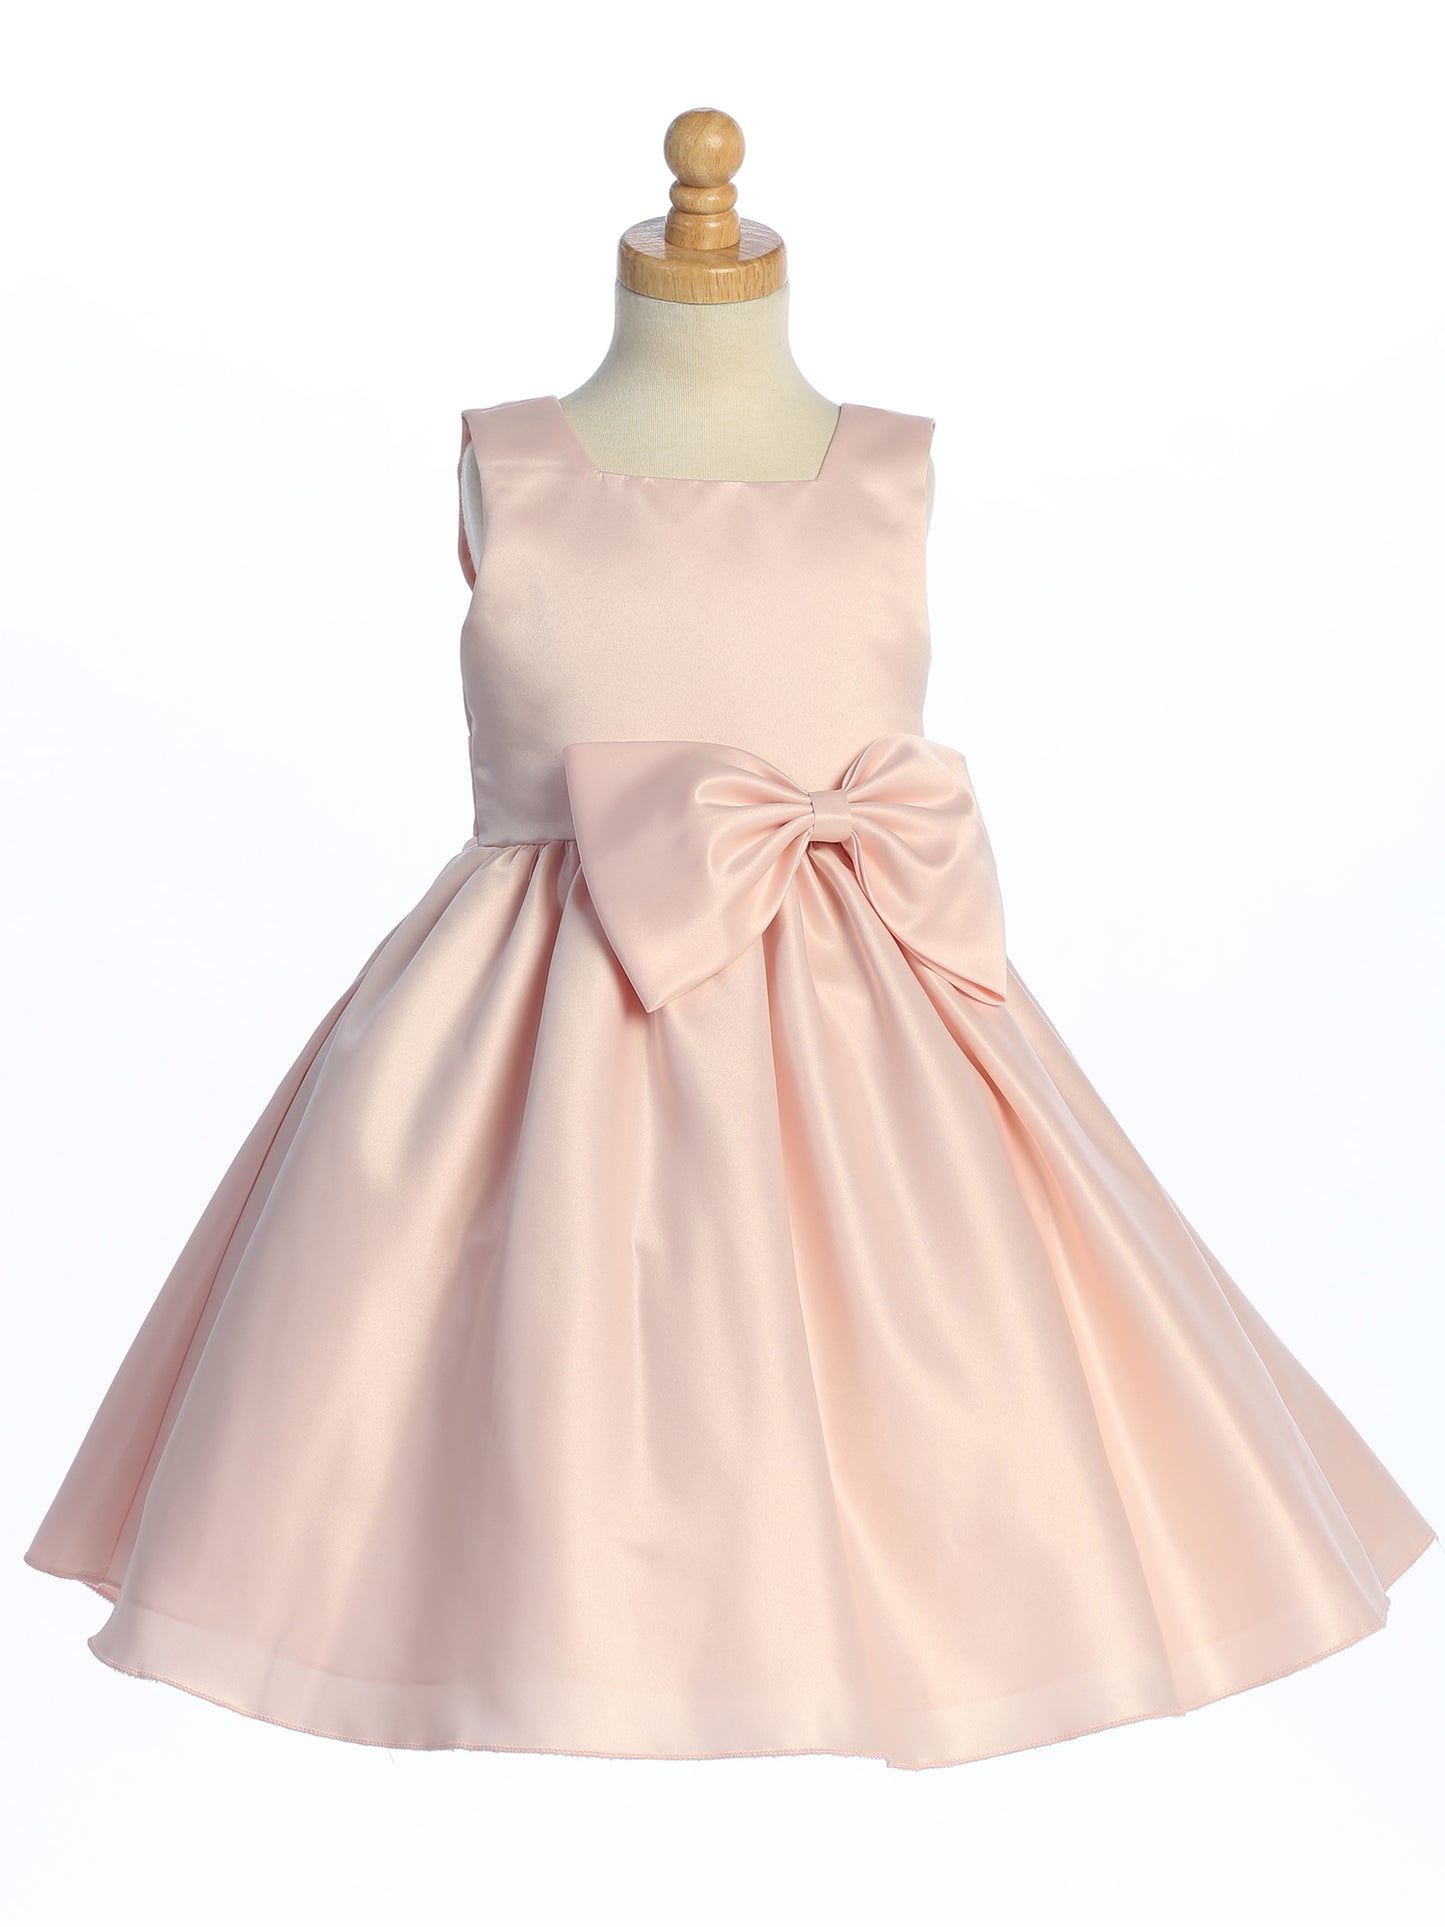 Satin Flower Girl Dress with Bow - Blush Pink - BL257-BLSH